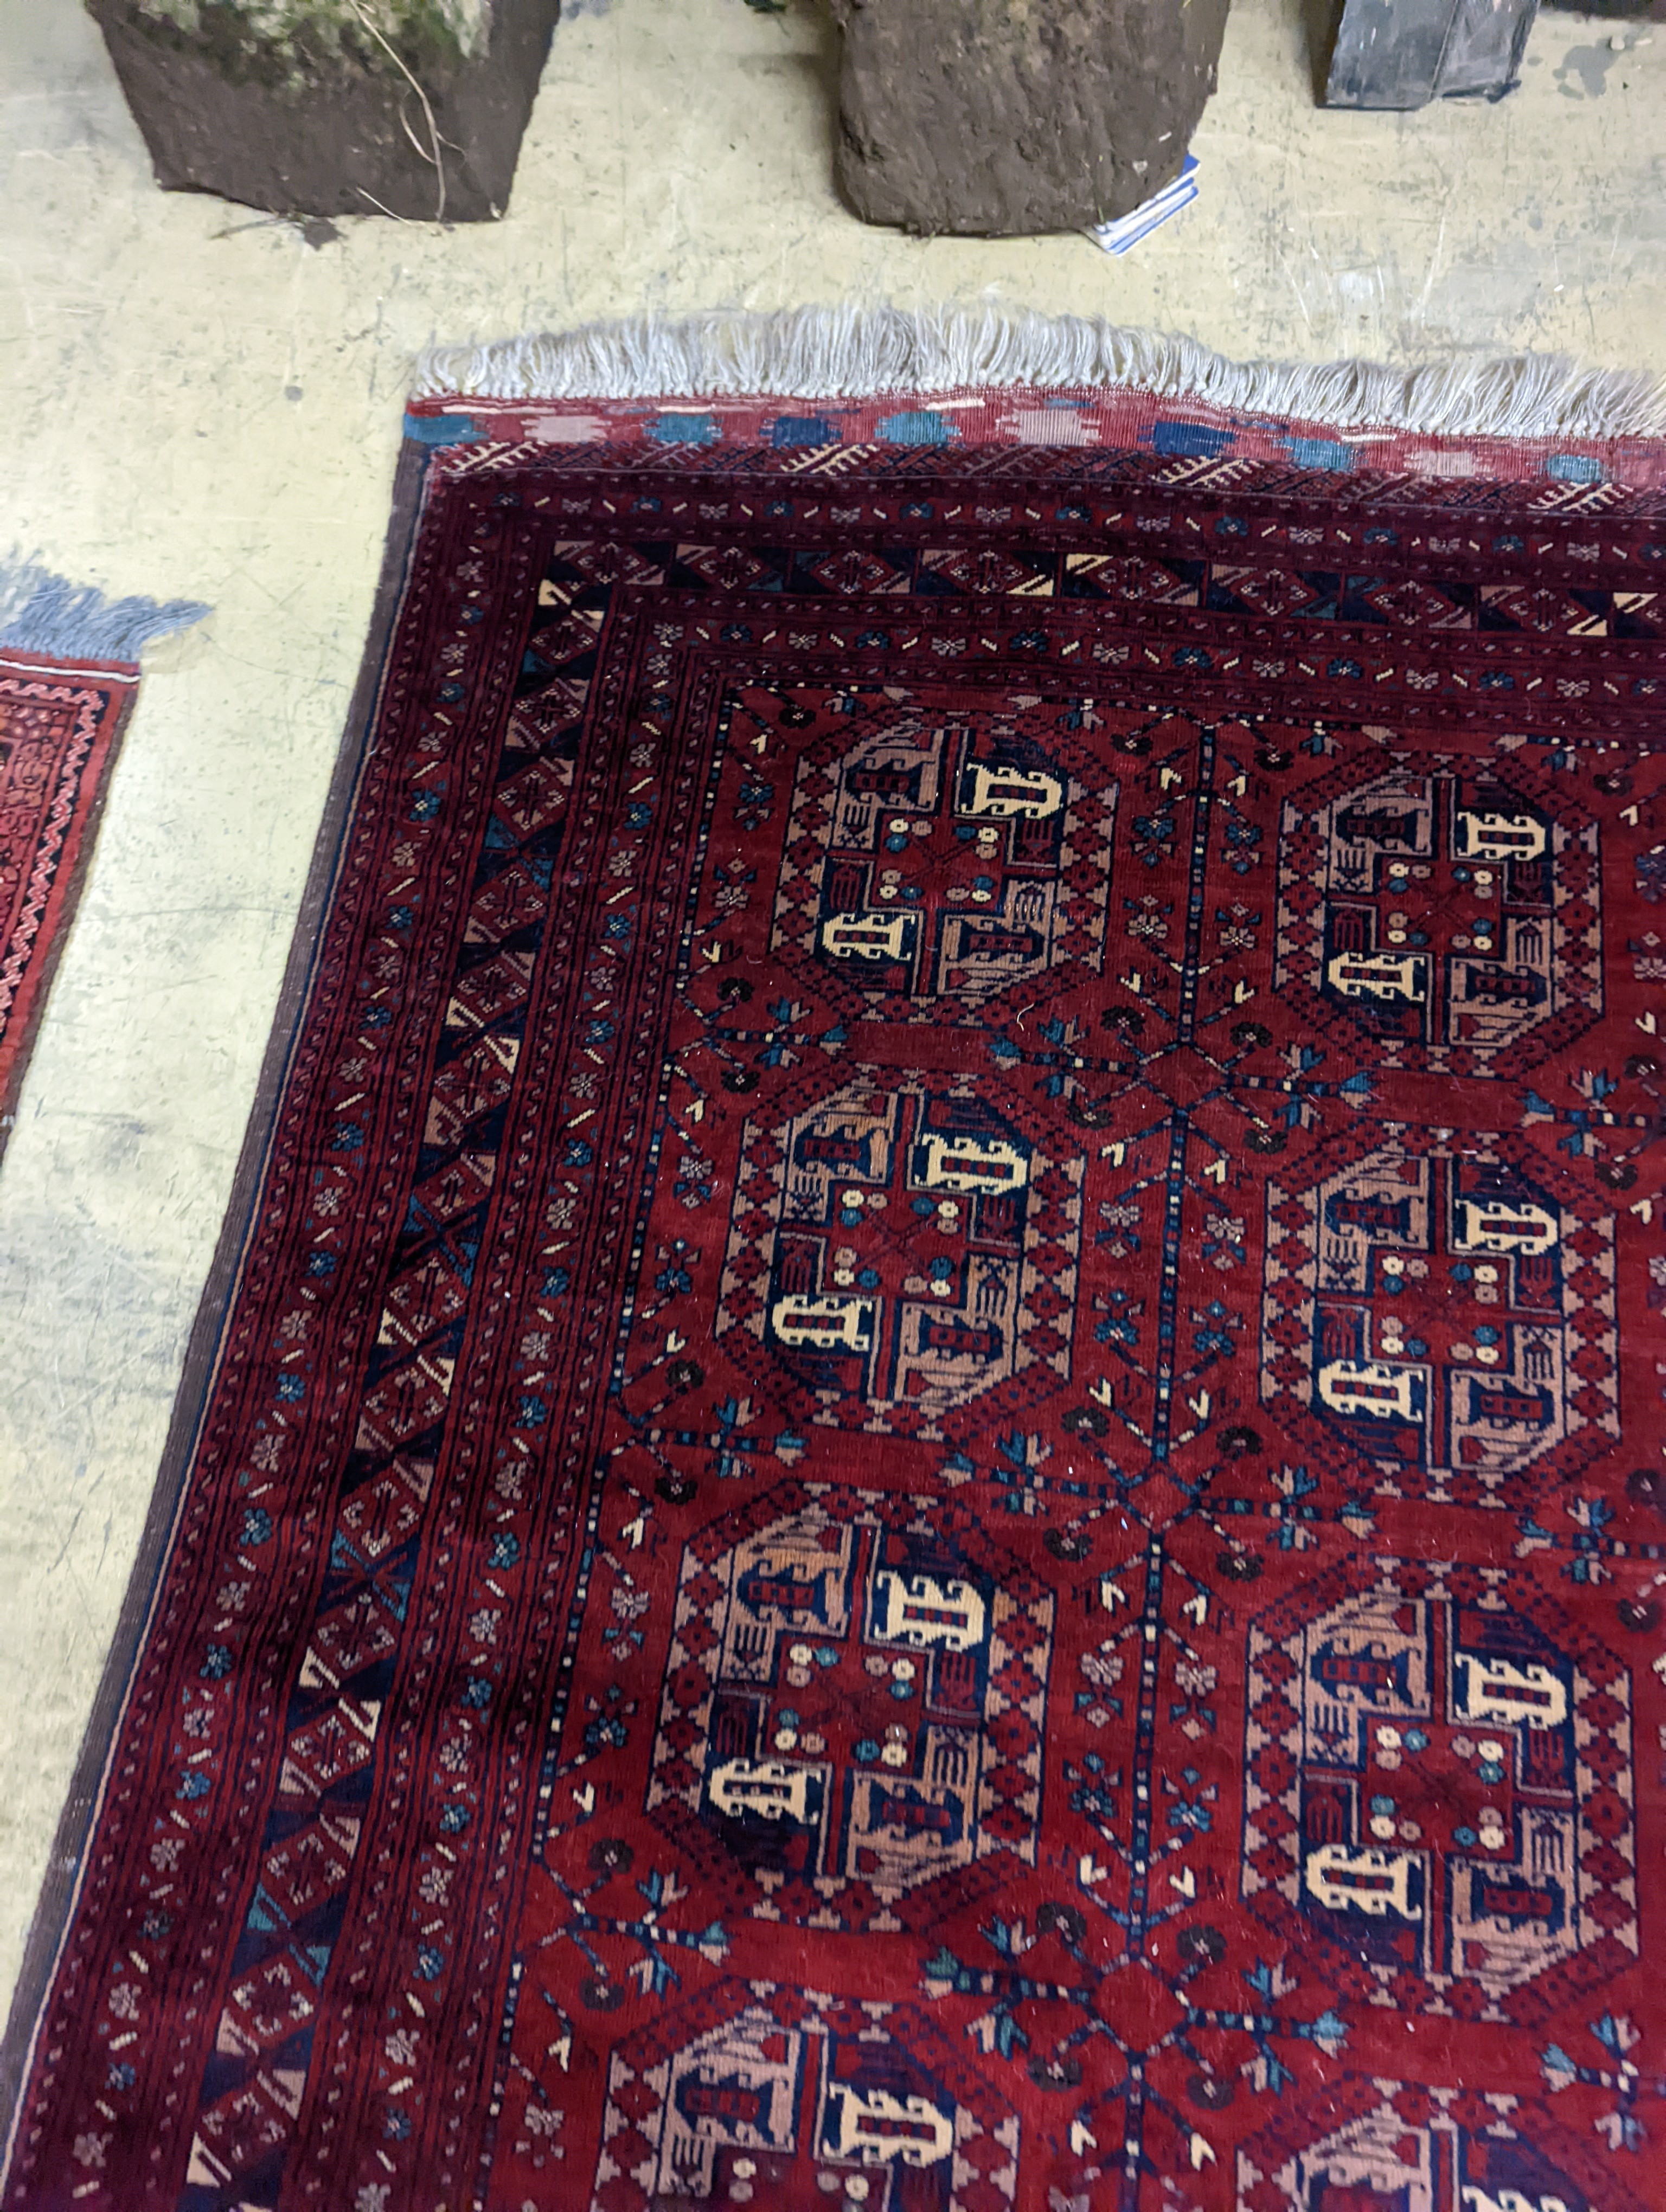 A Belouch red ground rug woven with octagonal motifs, 190 x 124 cms.